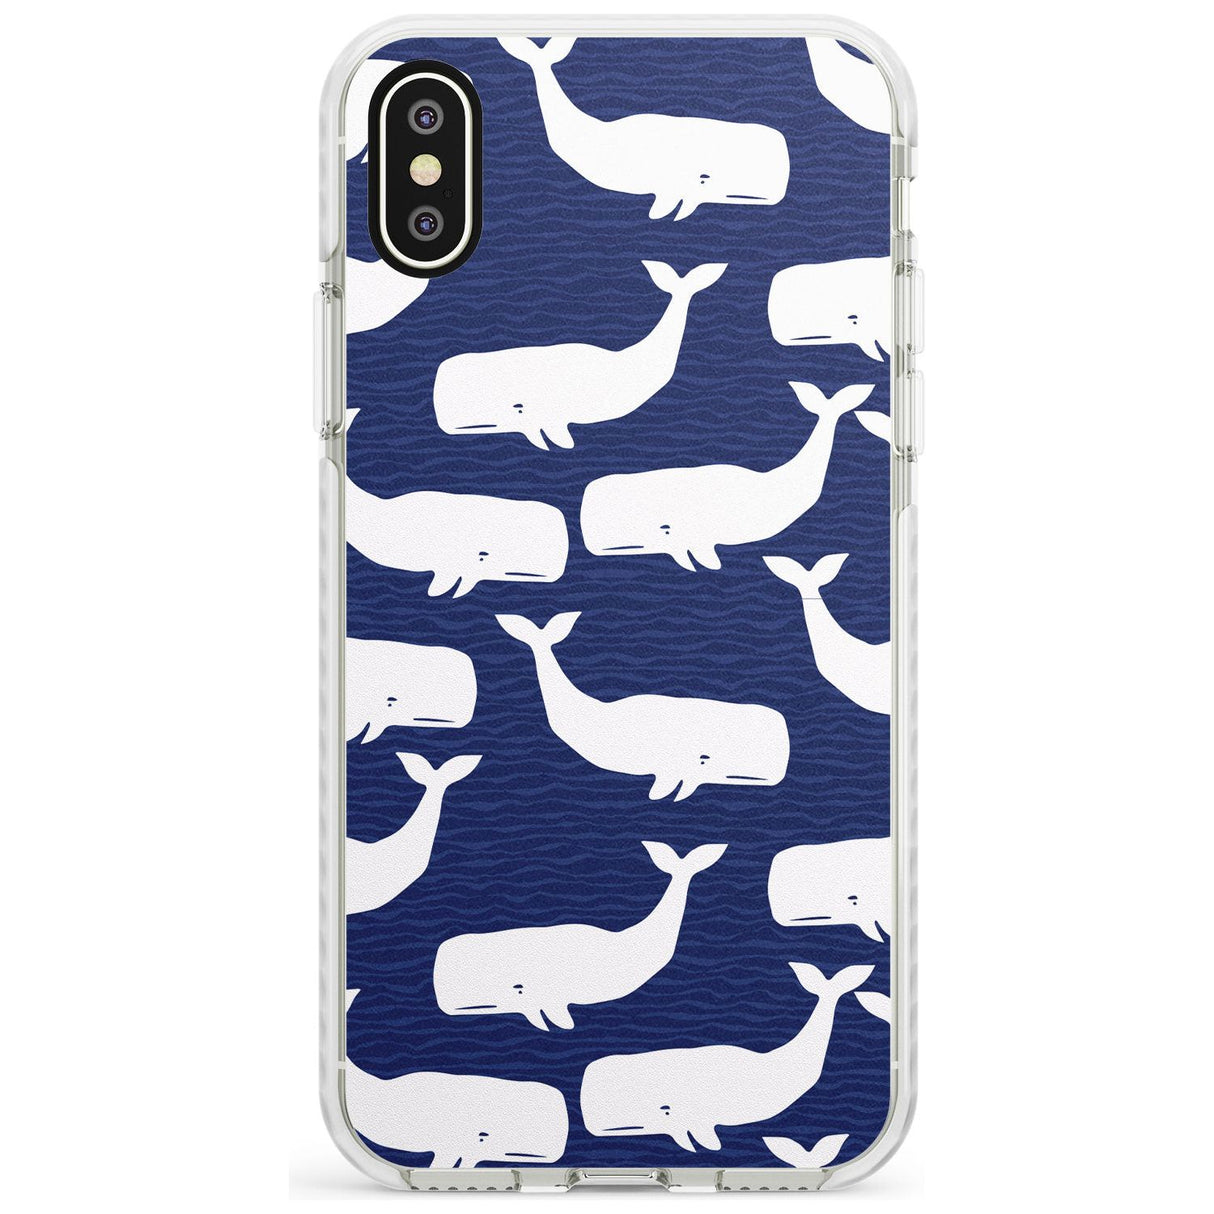 Cute Whales  Slim TPU Phone Case Warehouse X XS Max XR